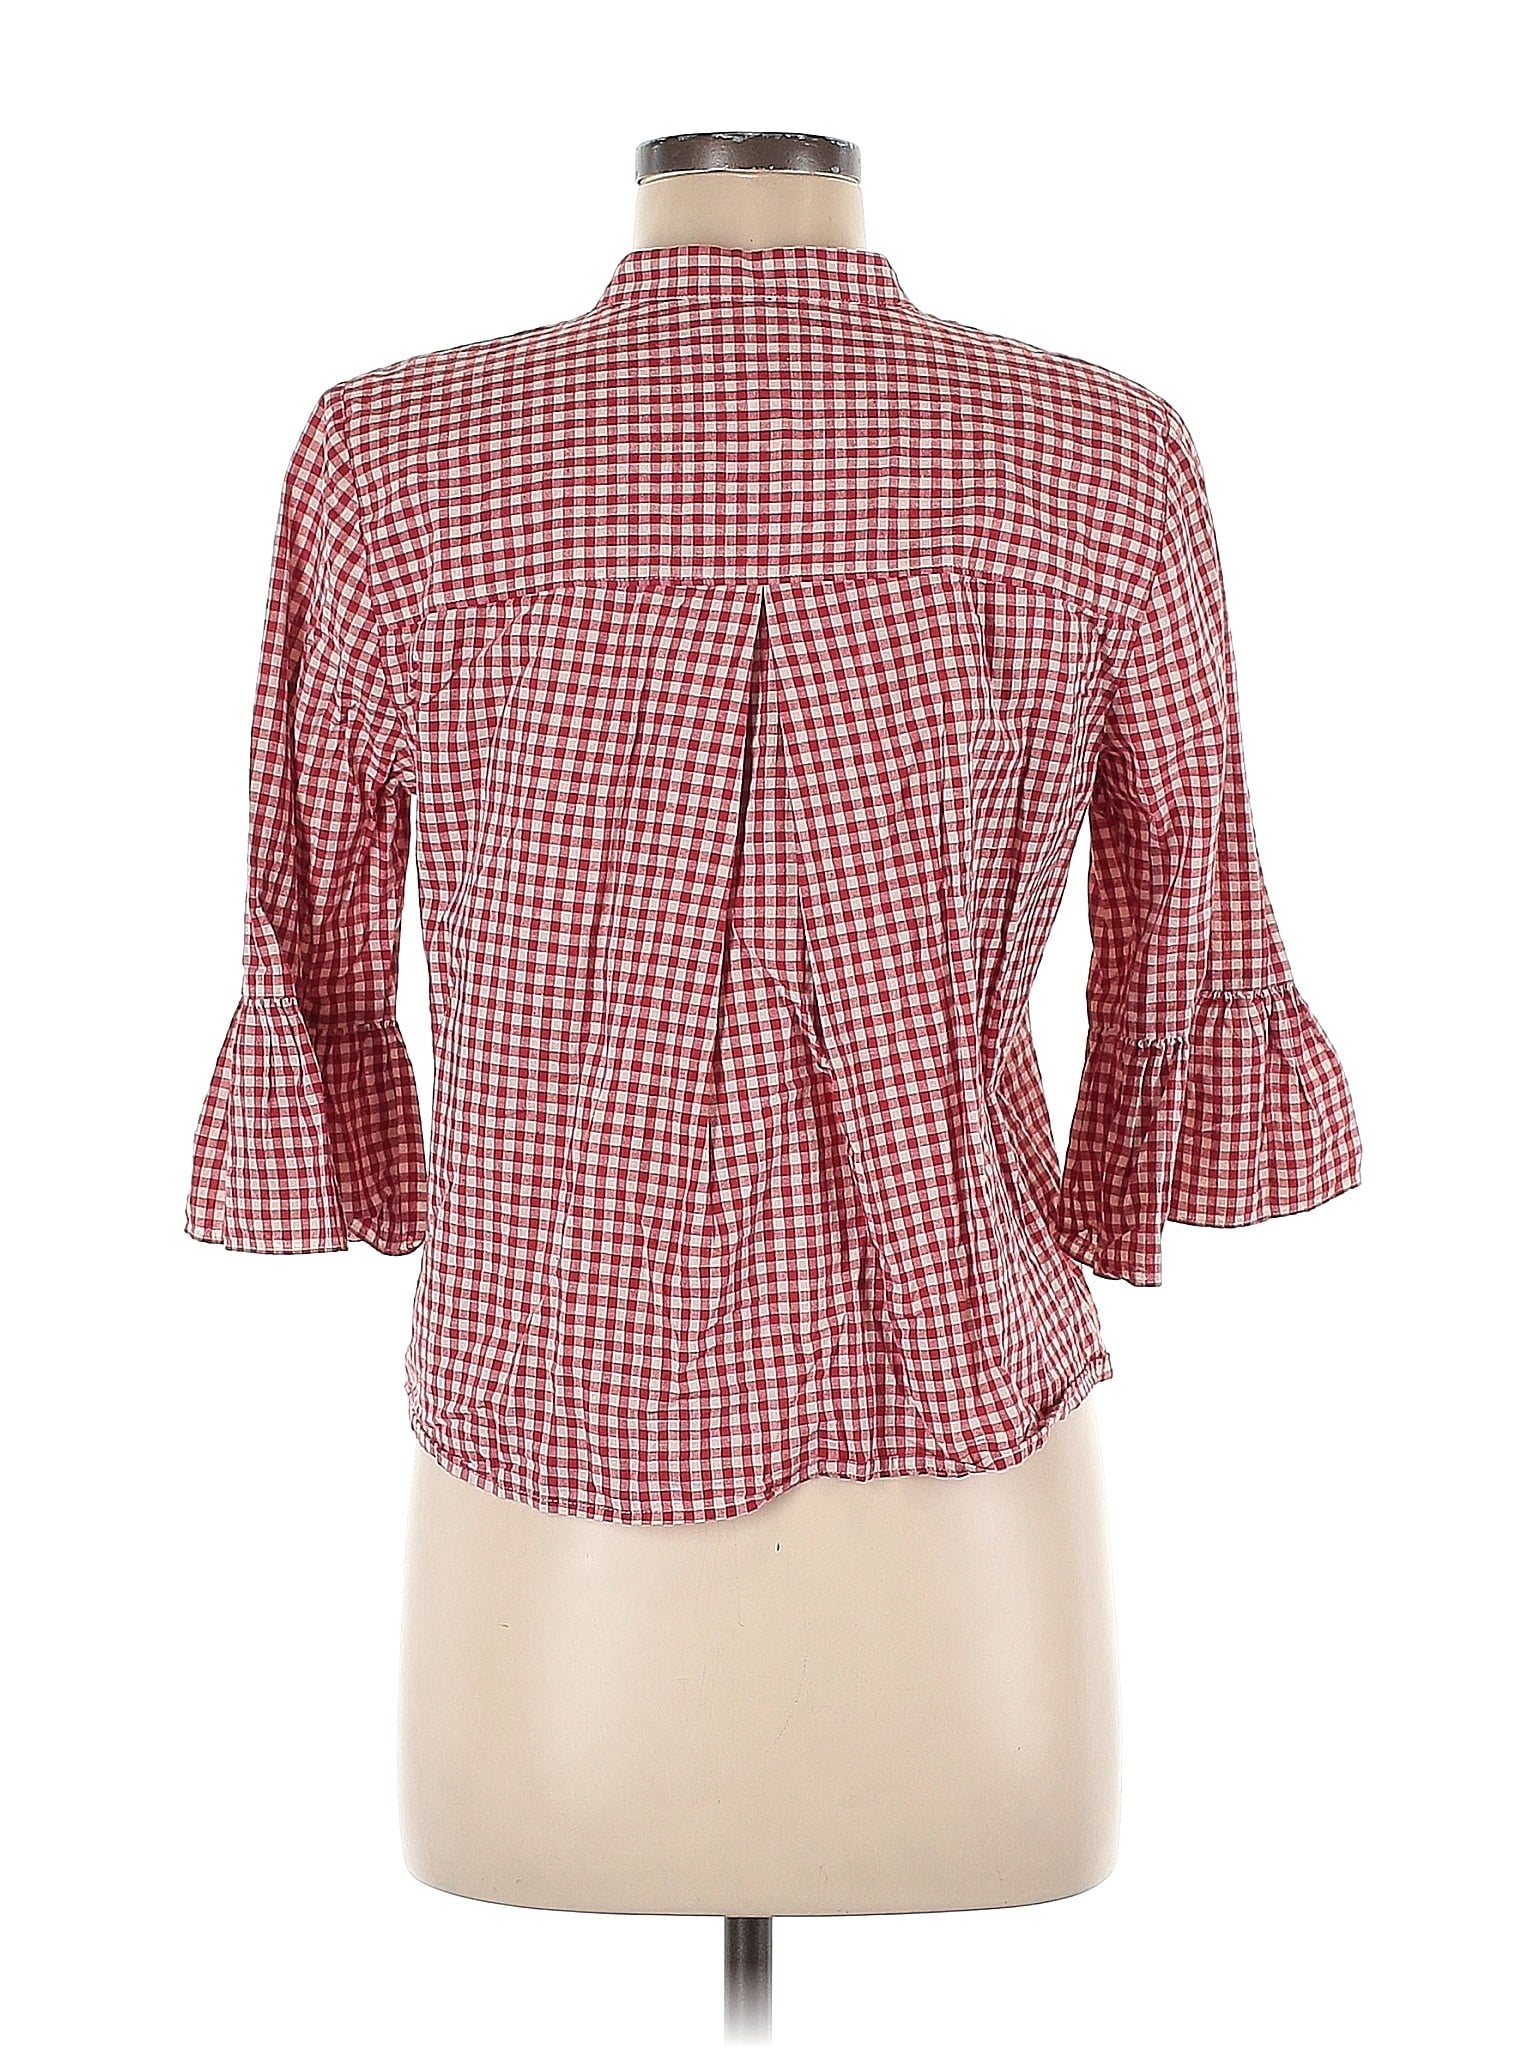 3/4 Sleeve Button-Down Shirt size - M